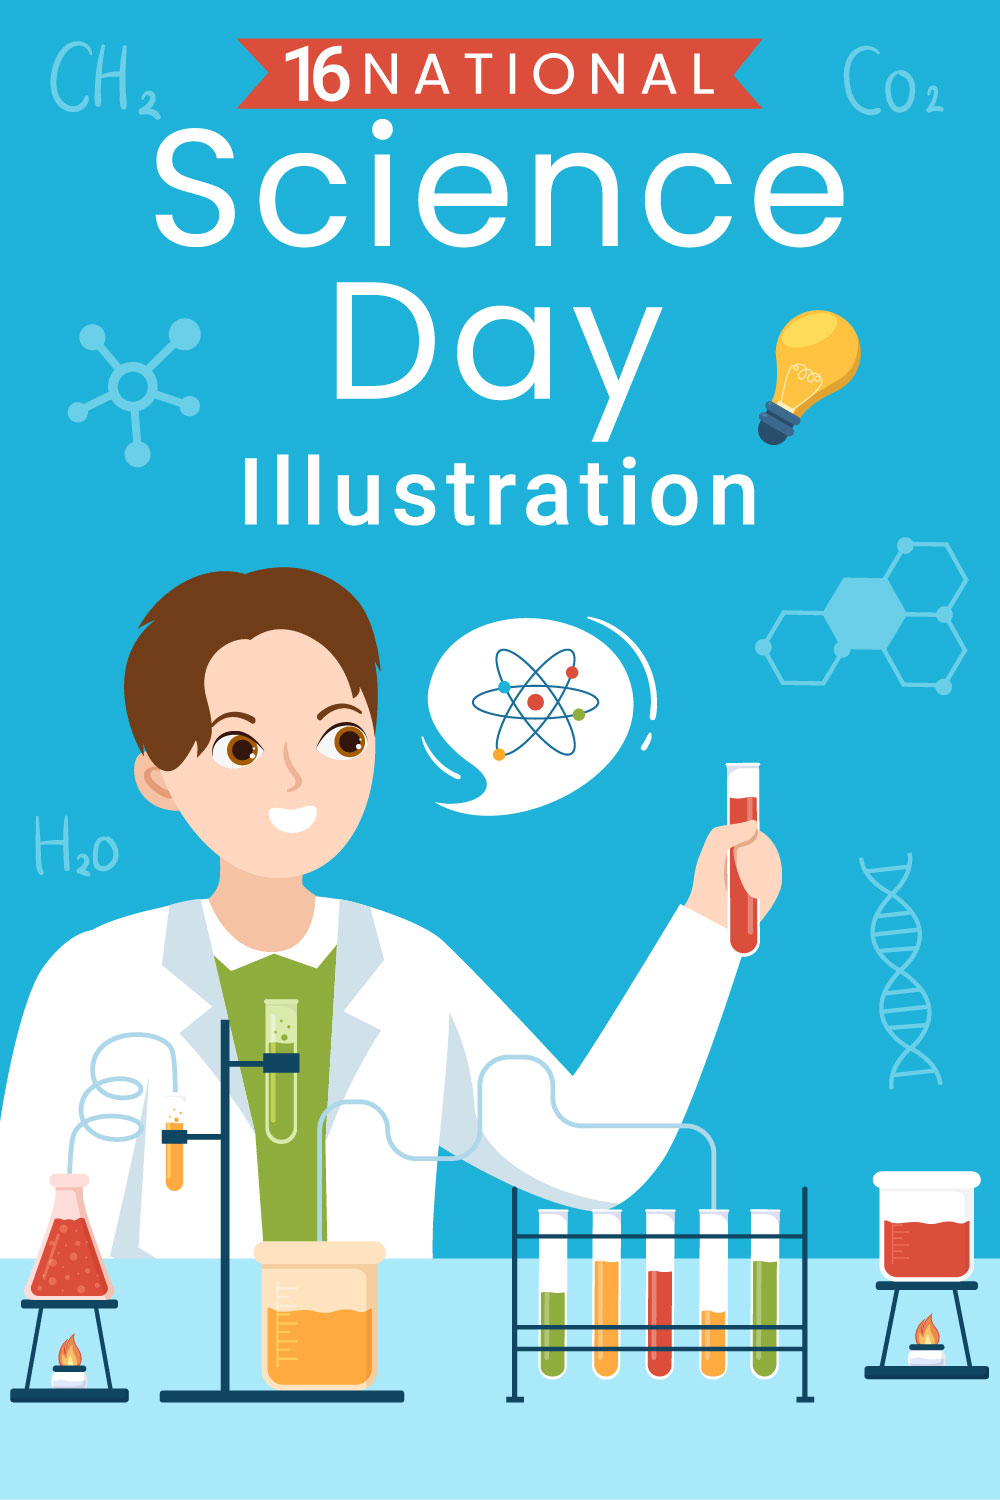 National Science Day Illustration pinterest image.